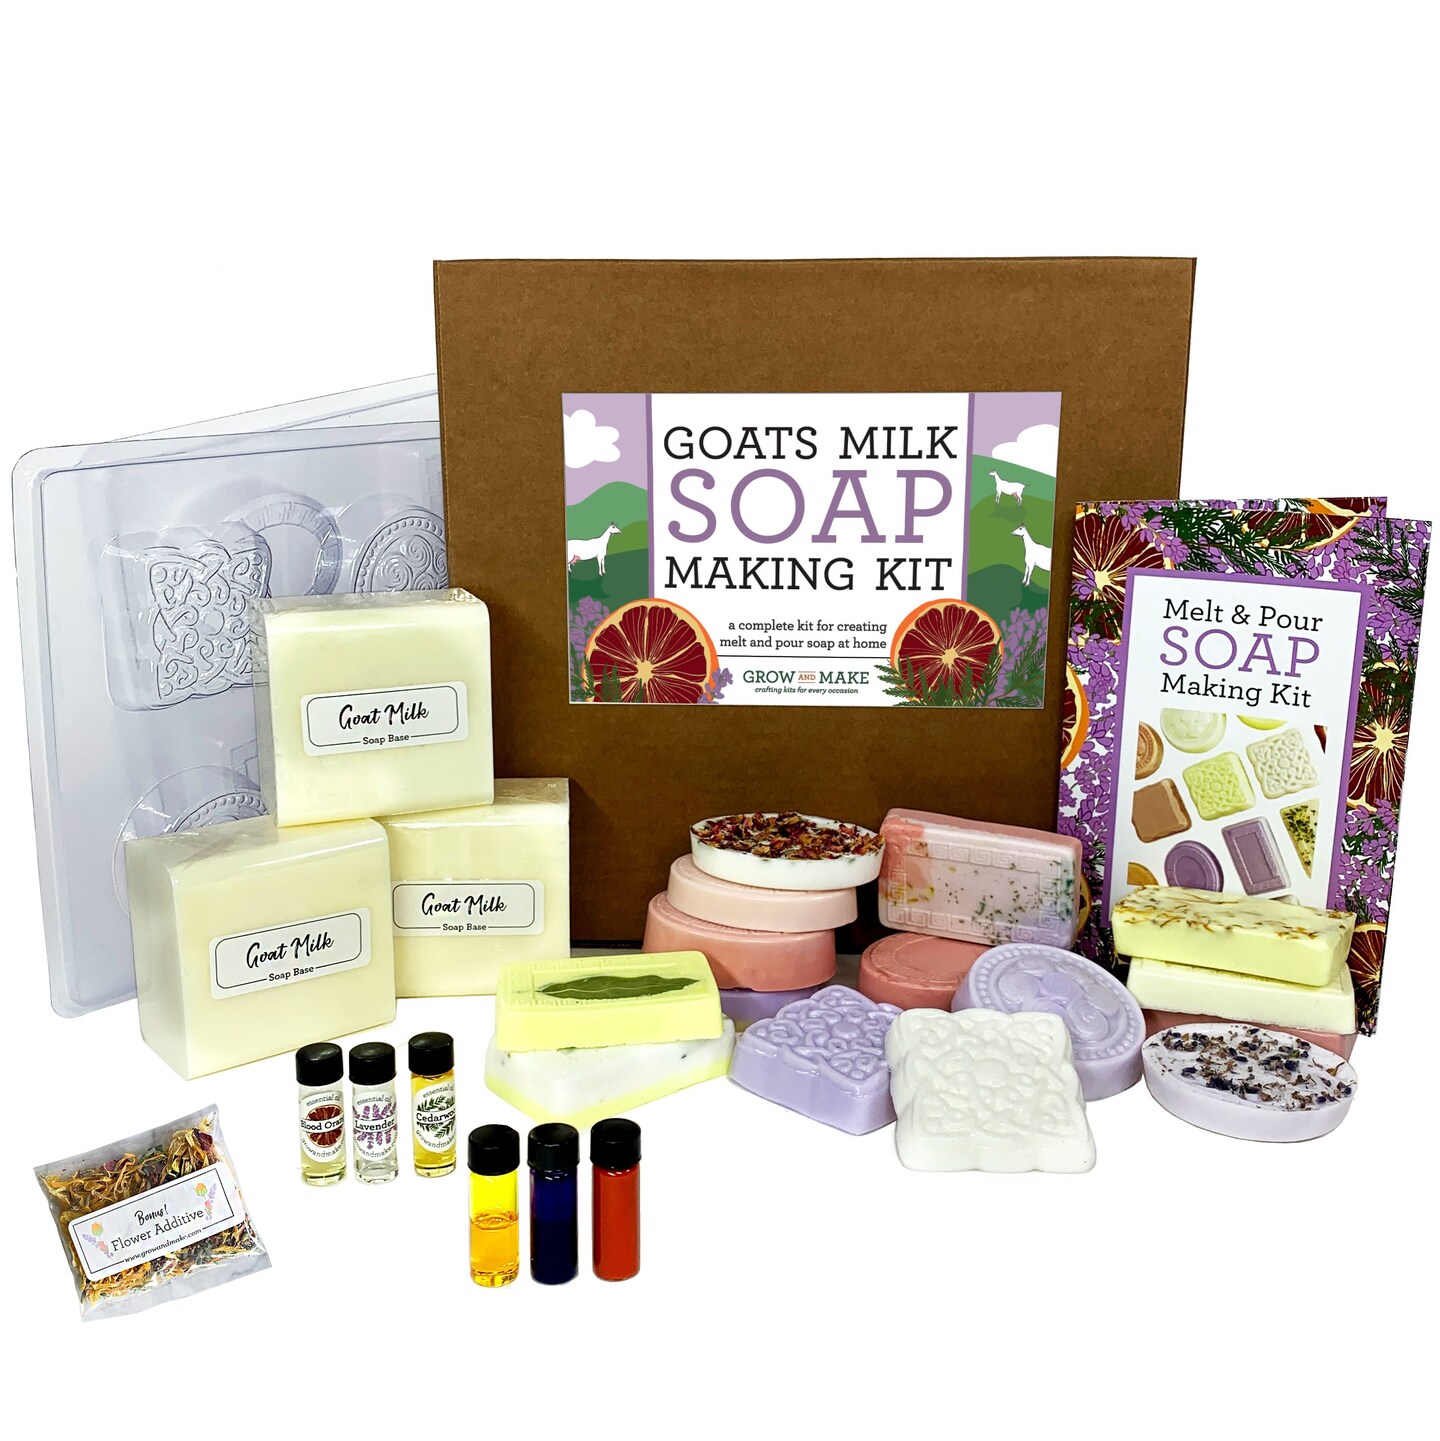 Buy Soap Making Kit Combo Box Online